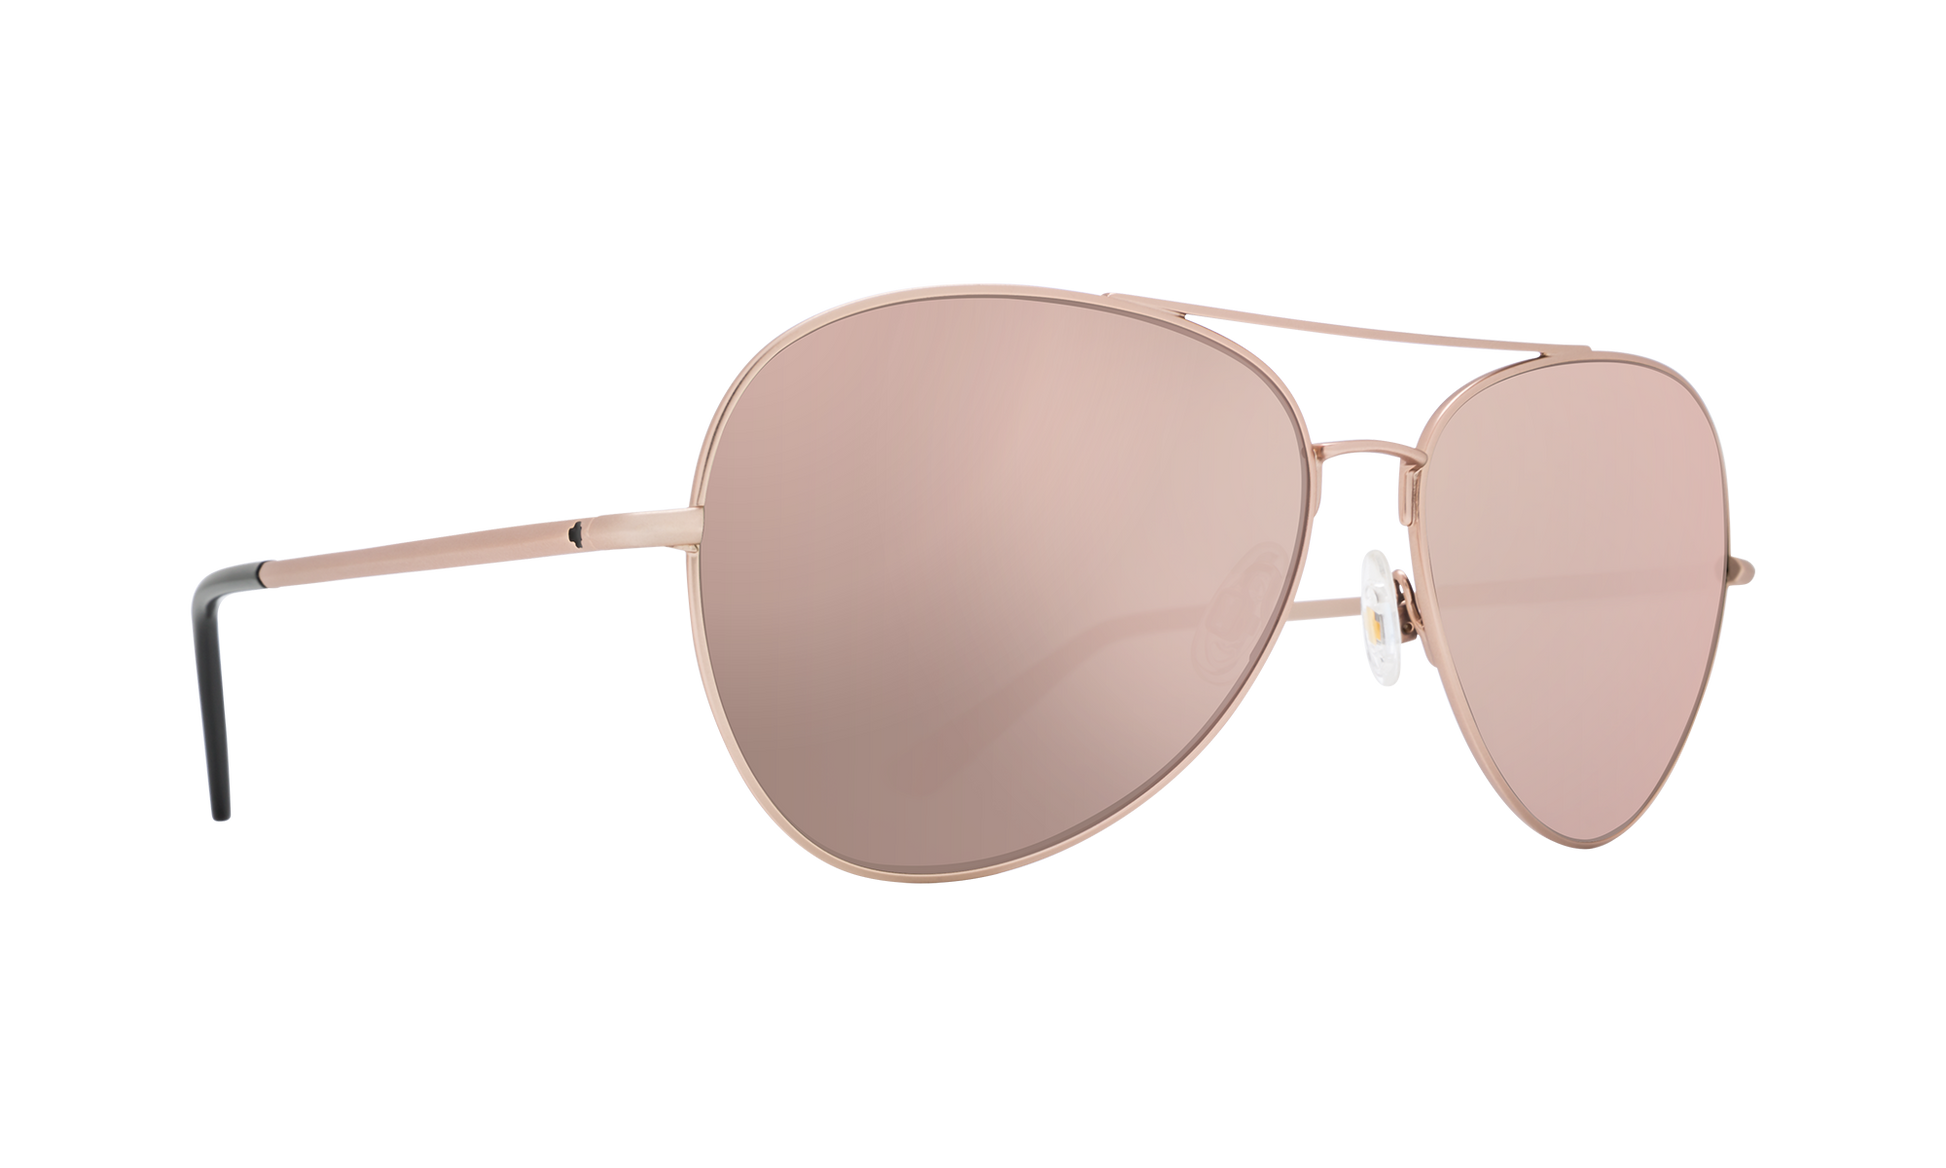 SPY Blackburn Sunglasses  HD Plus Gray Green with Rose Quartz Spectra Mirror Matte Rose Gold  60-14-145